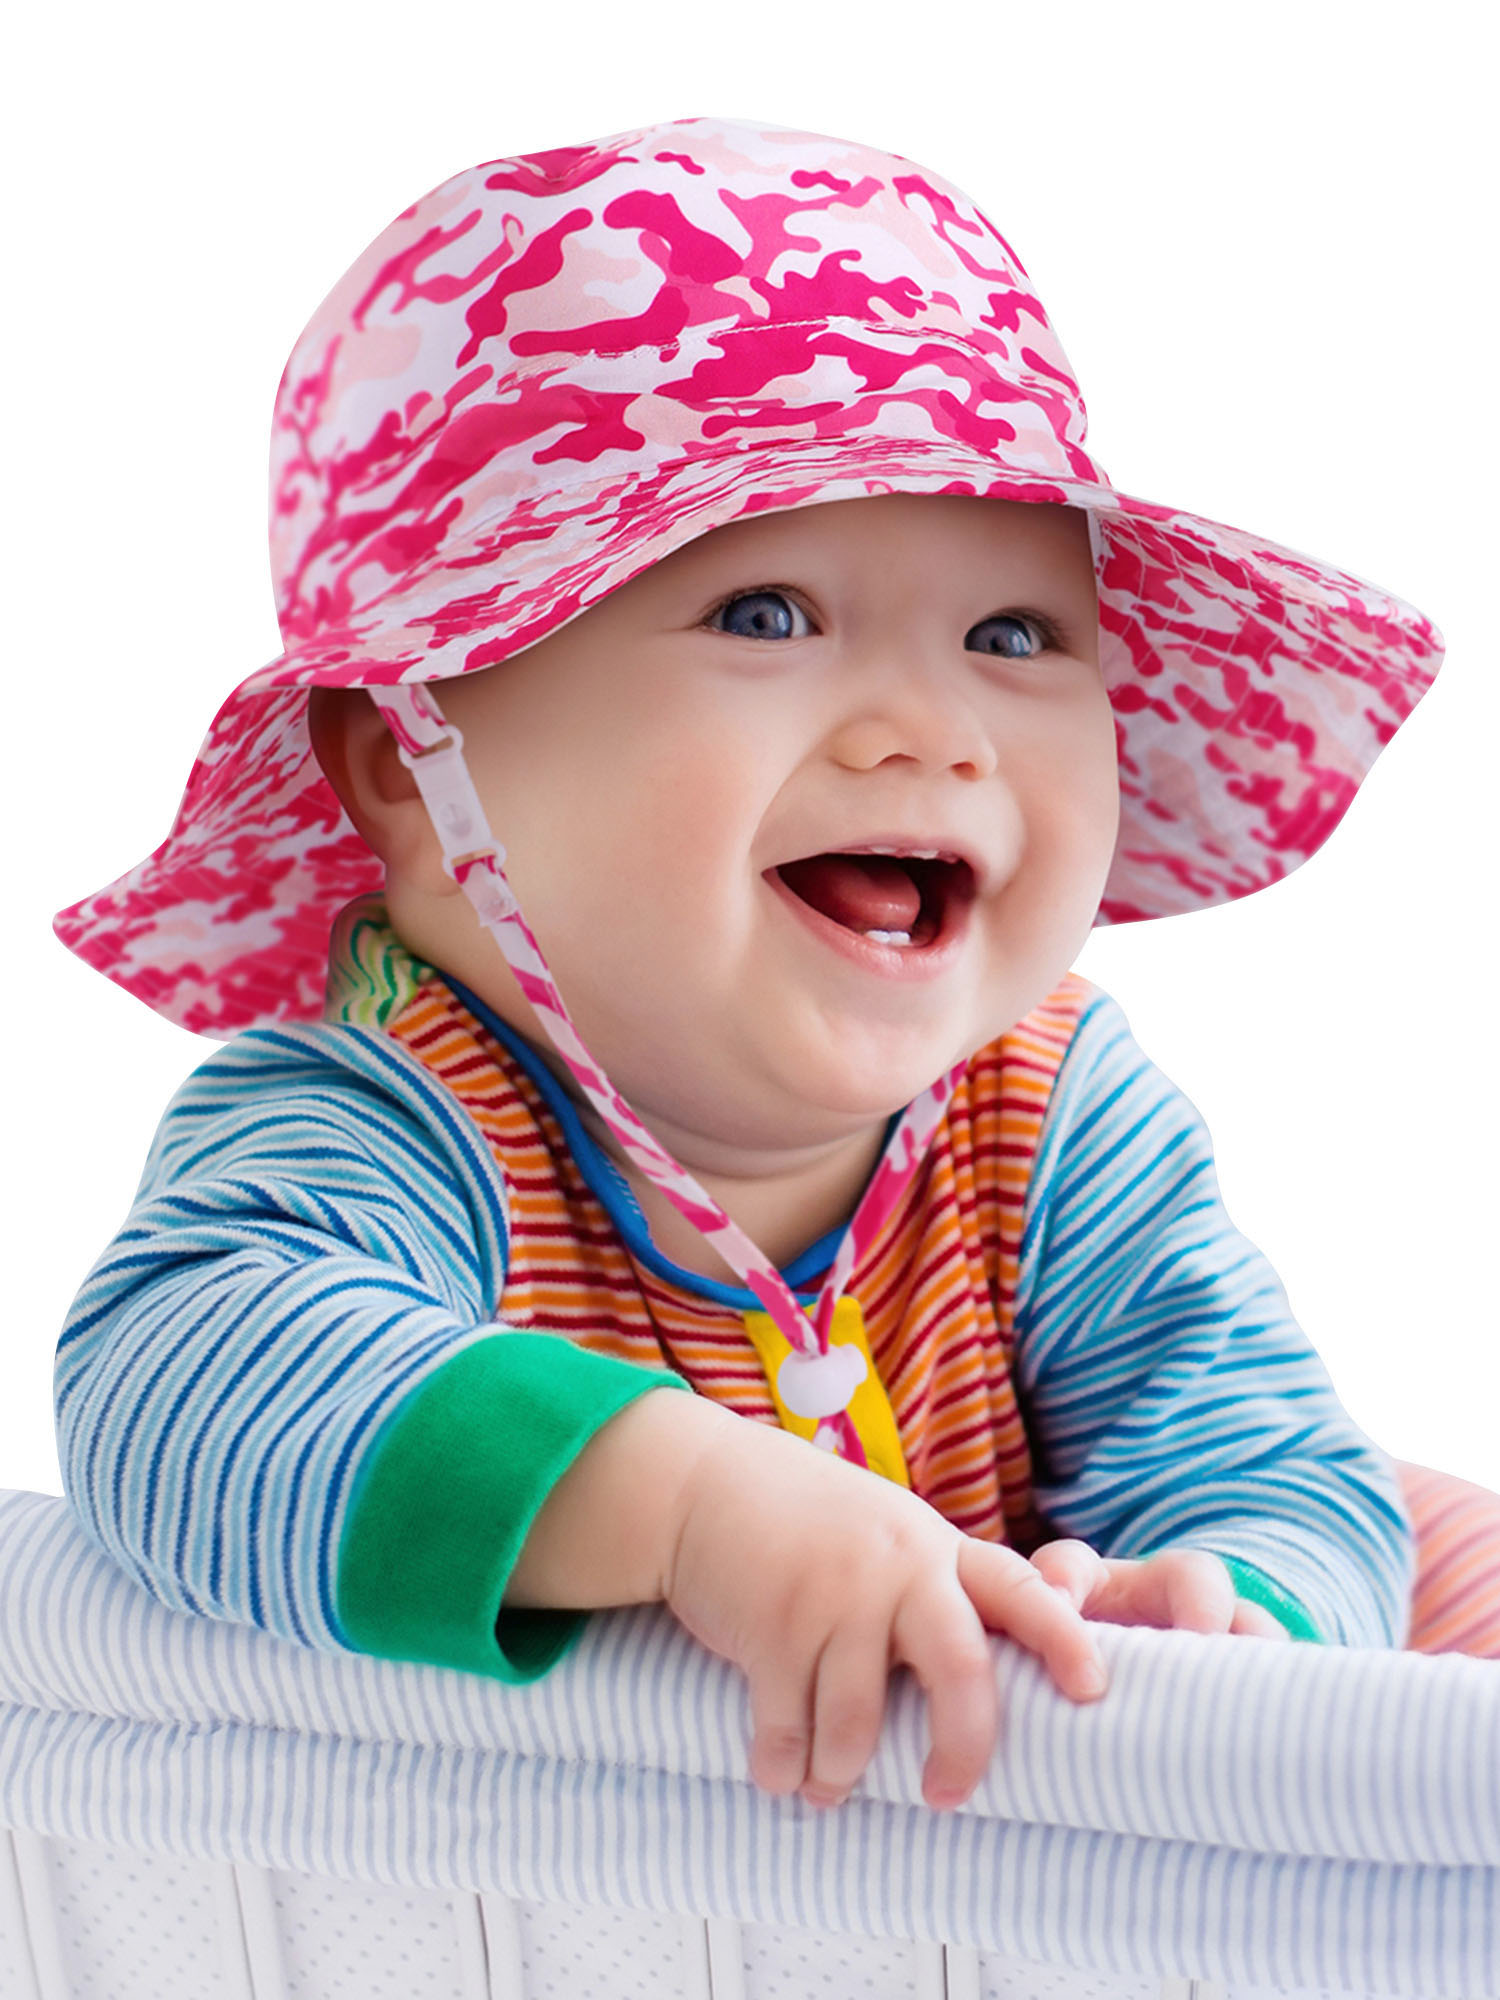 SimpliKids Spf Hat Baby Bucket Hats for Kids Summer Kids Bucket Hat Girls Swimming Sun Protection Hats for Baby Girls Kid Hat Baby Girl Hats, Pink Camo, 2-4T - image 1 of 6